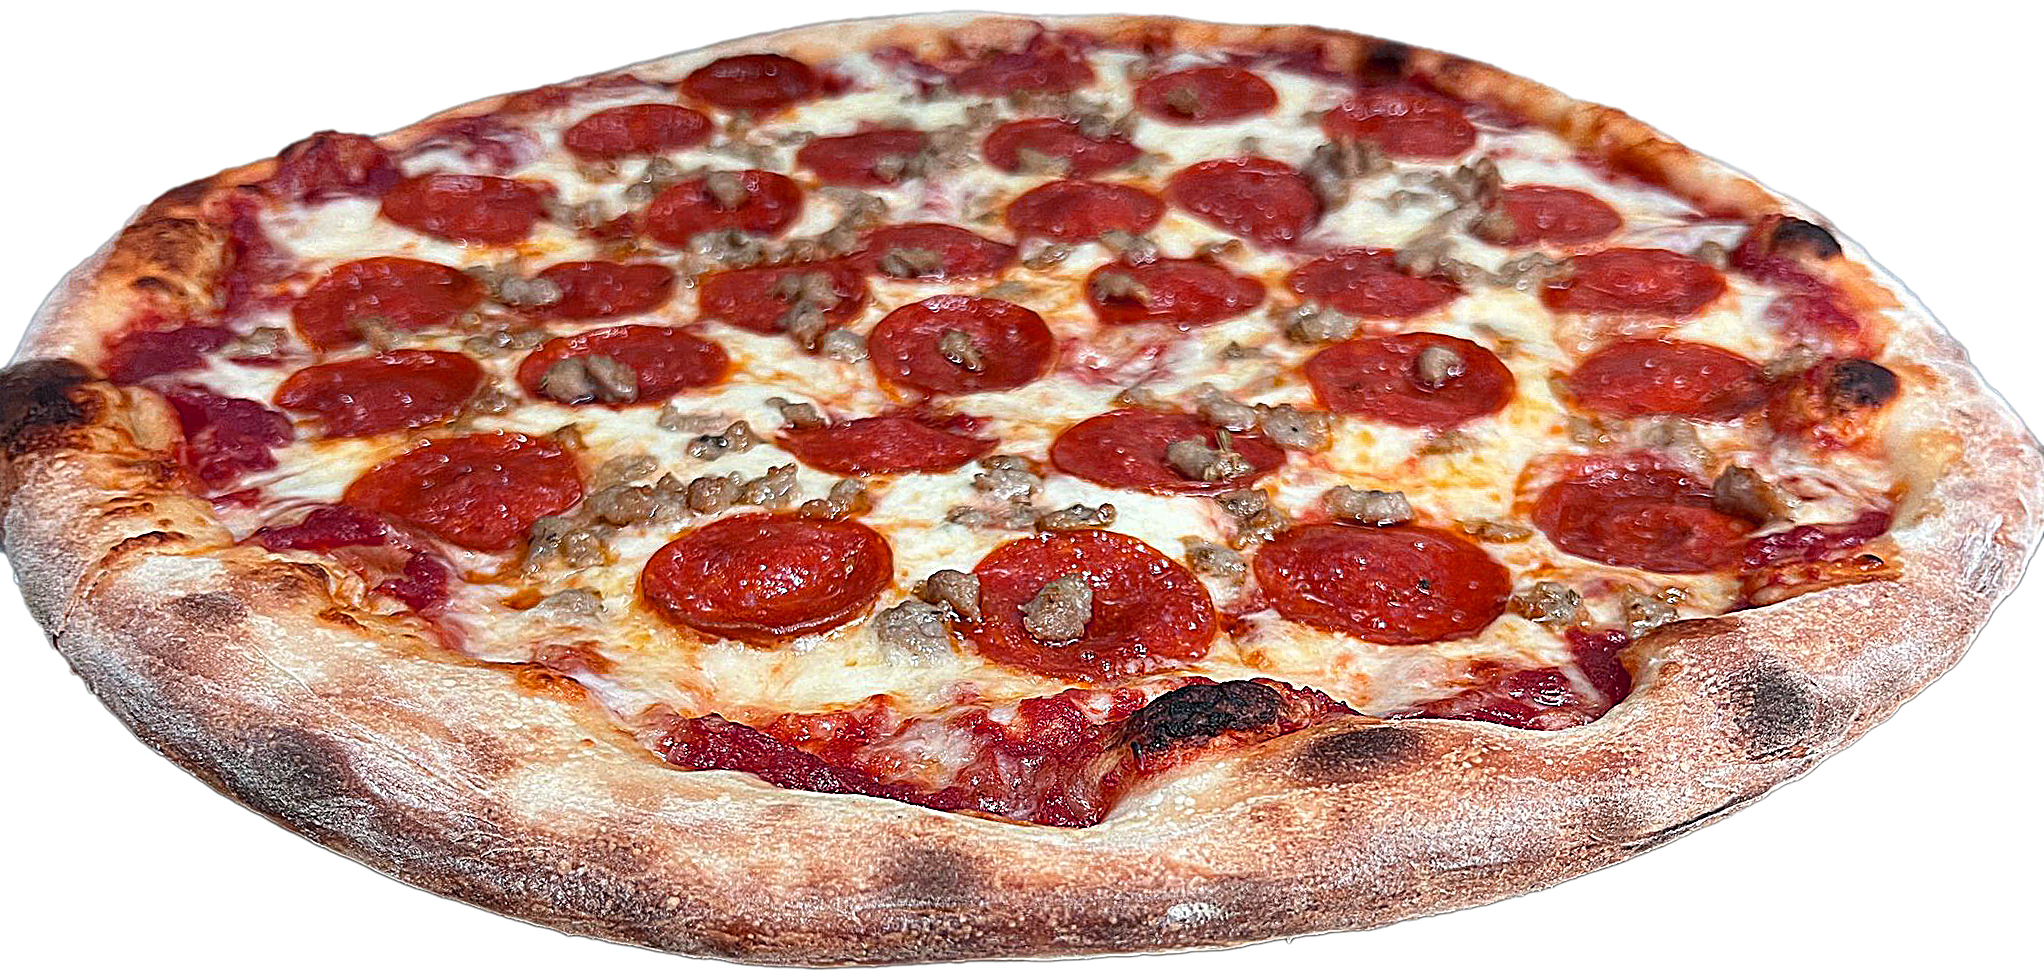 Pepperoni Sausage Pizza